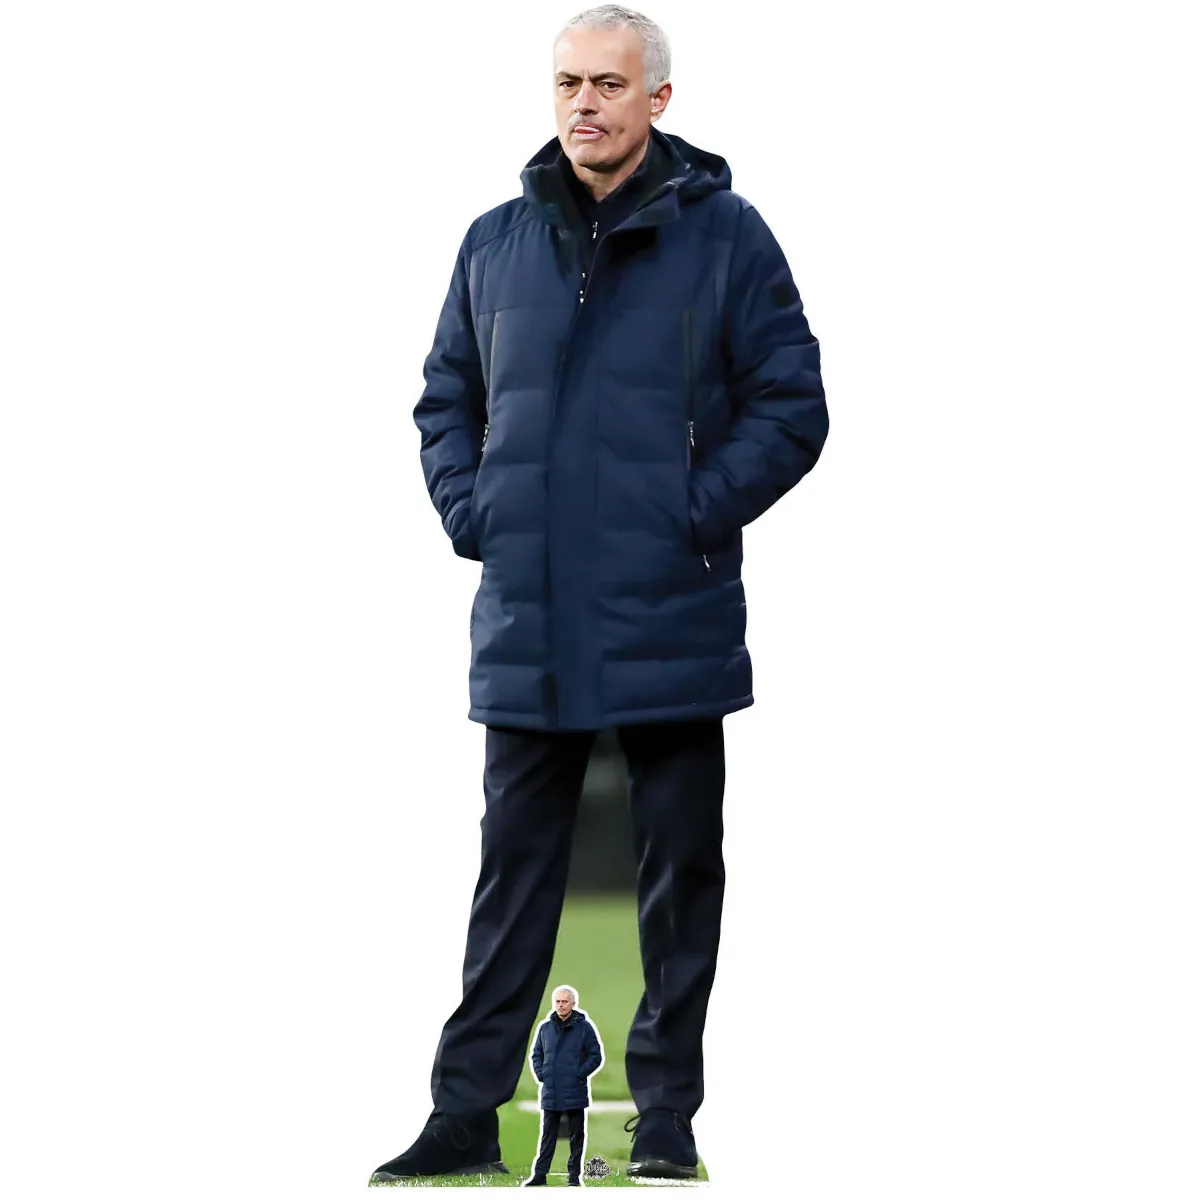 CS1037 Jose Mourinho (Portuguese Football Manager) Lifesize + Mini Cardboard Cutout Standee Front